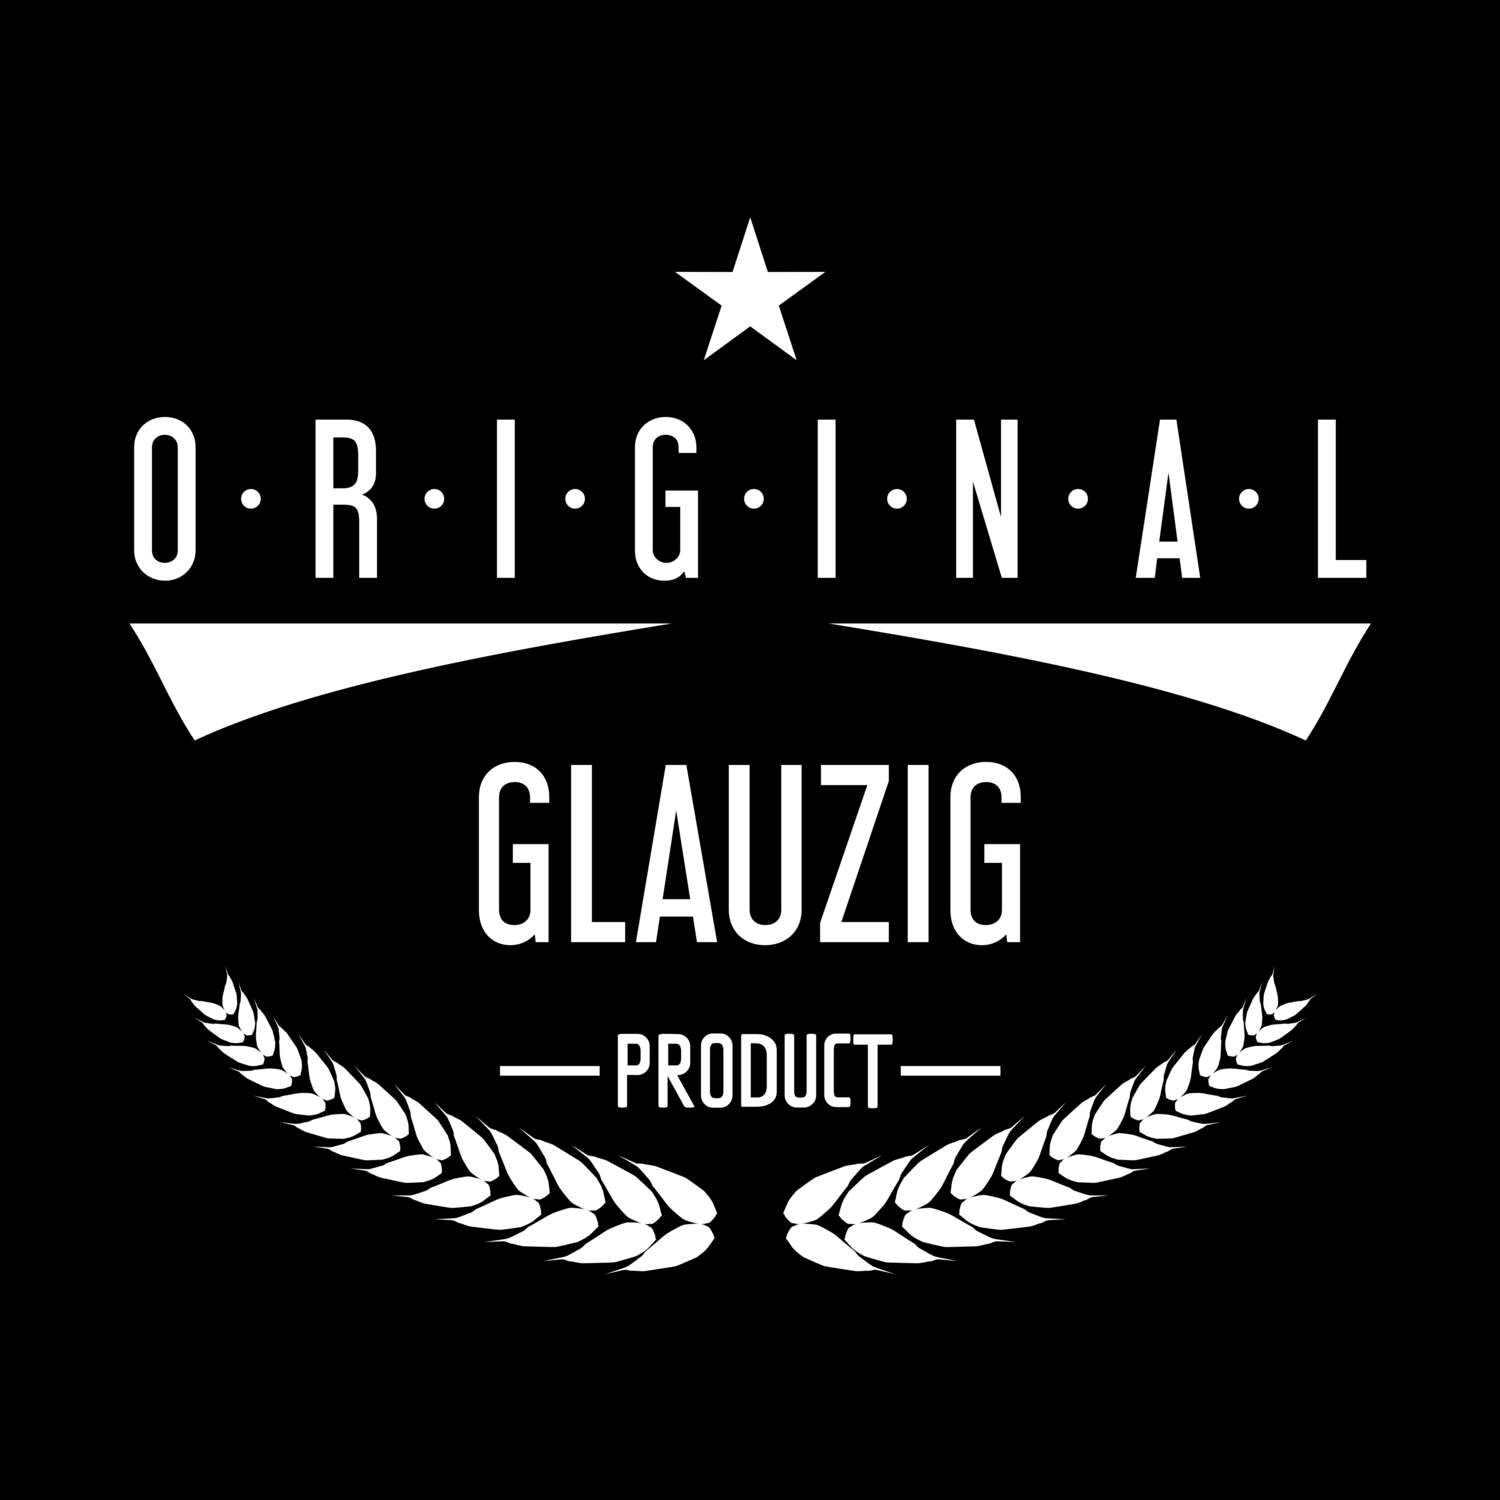 Glauzig T-Shirt »Original Product«